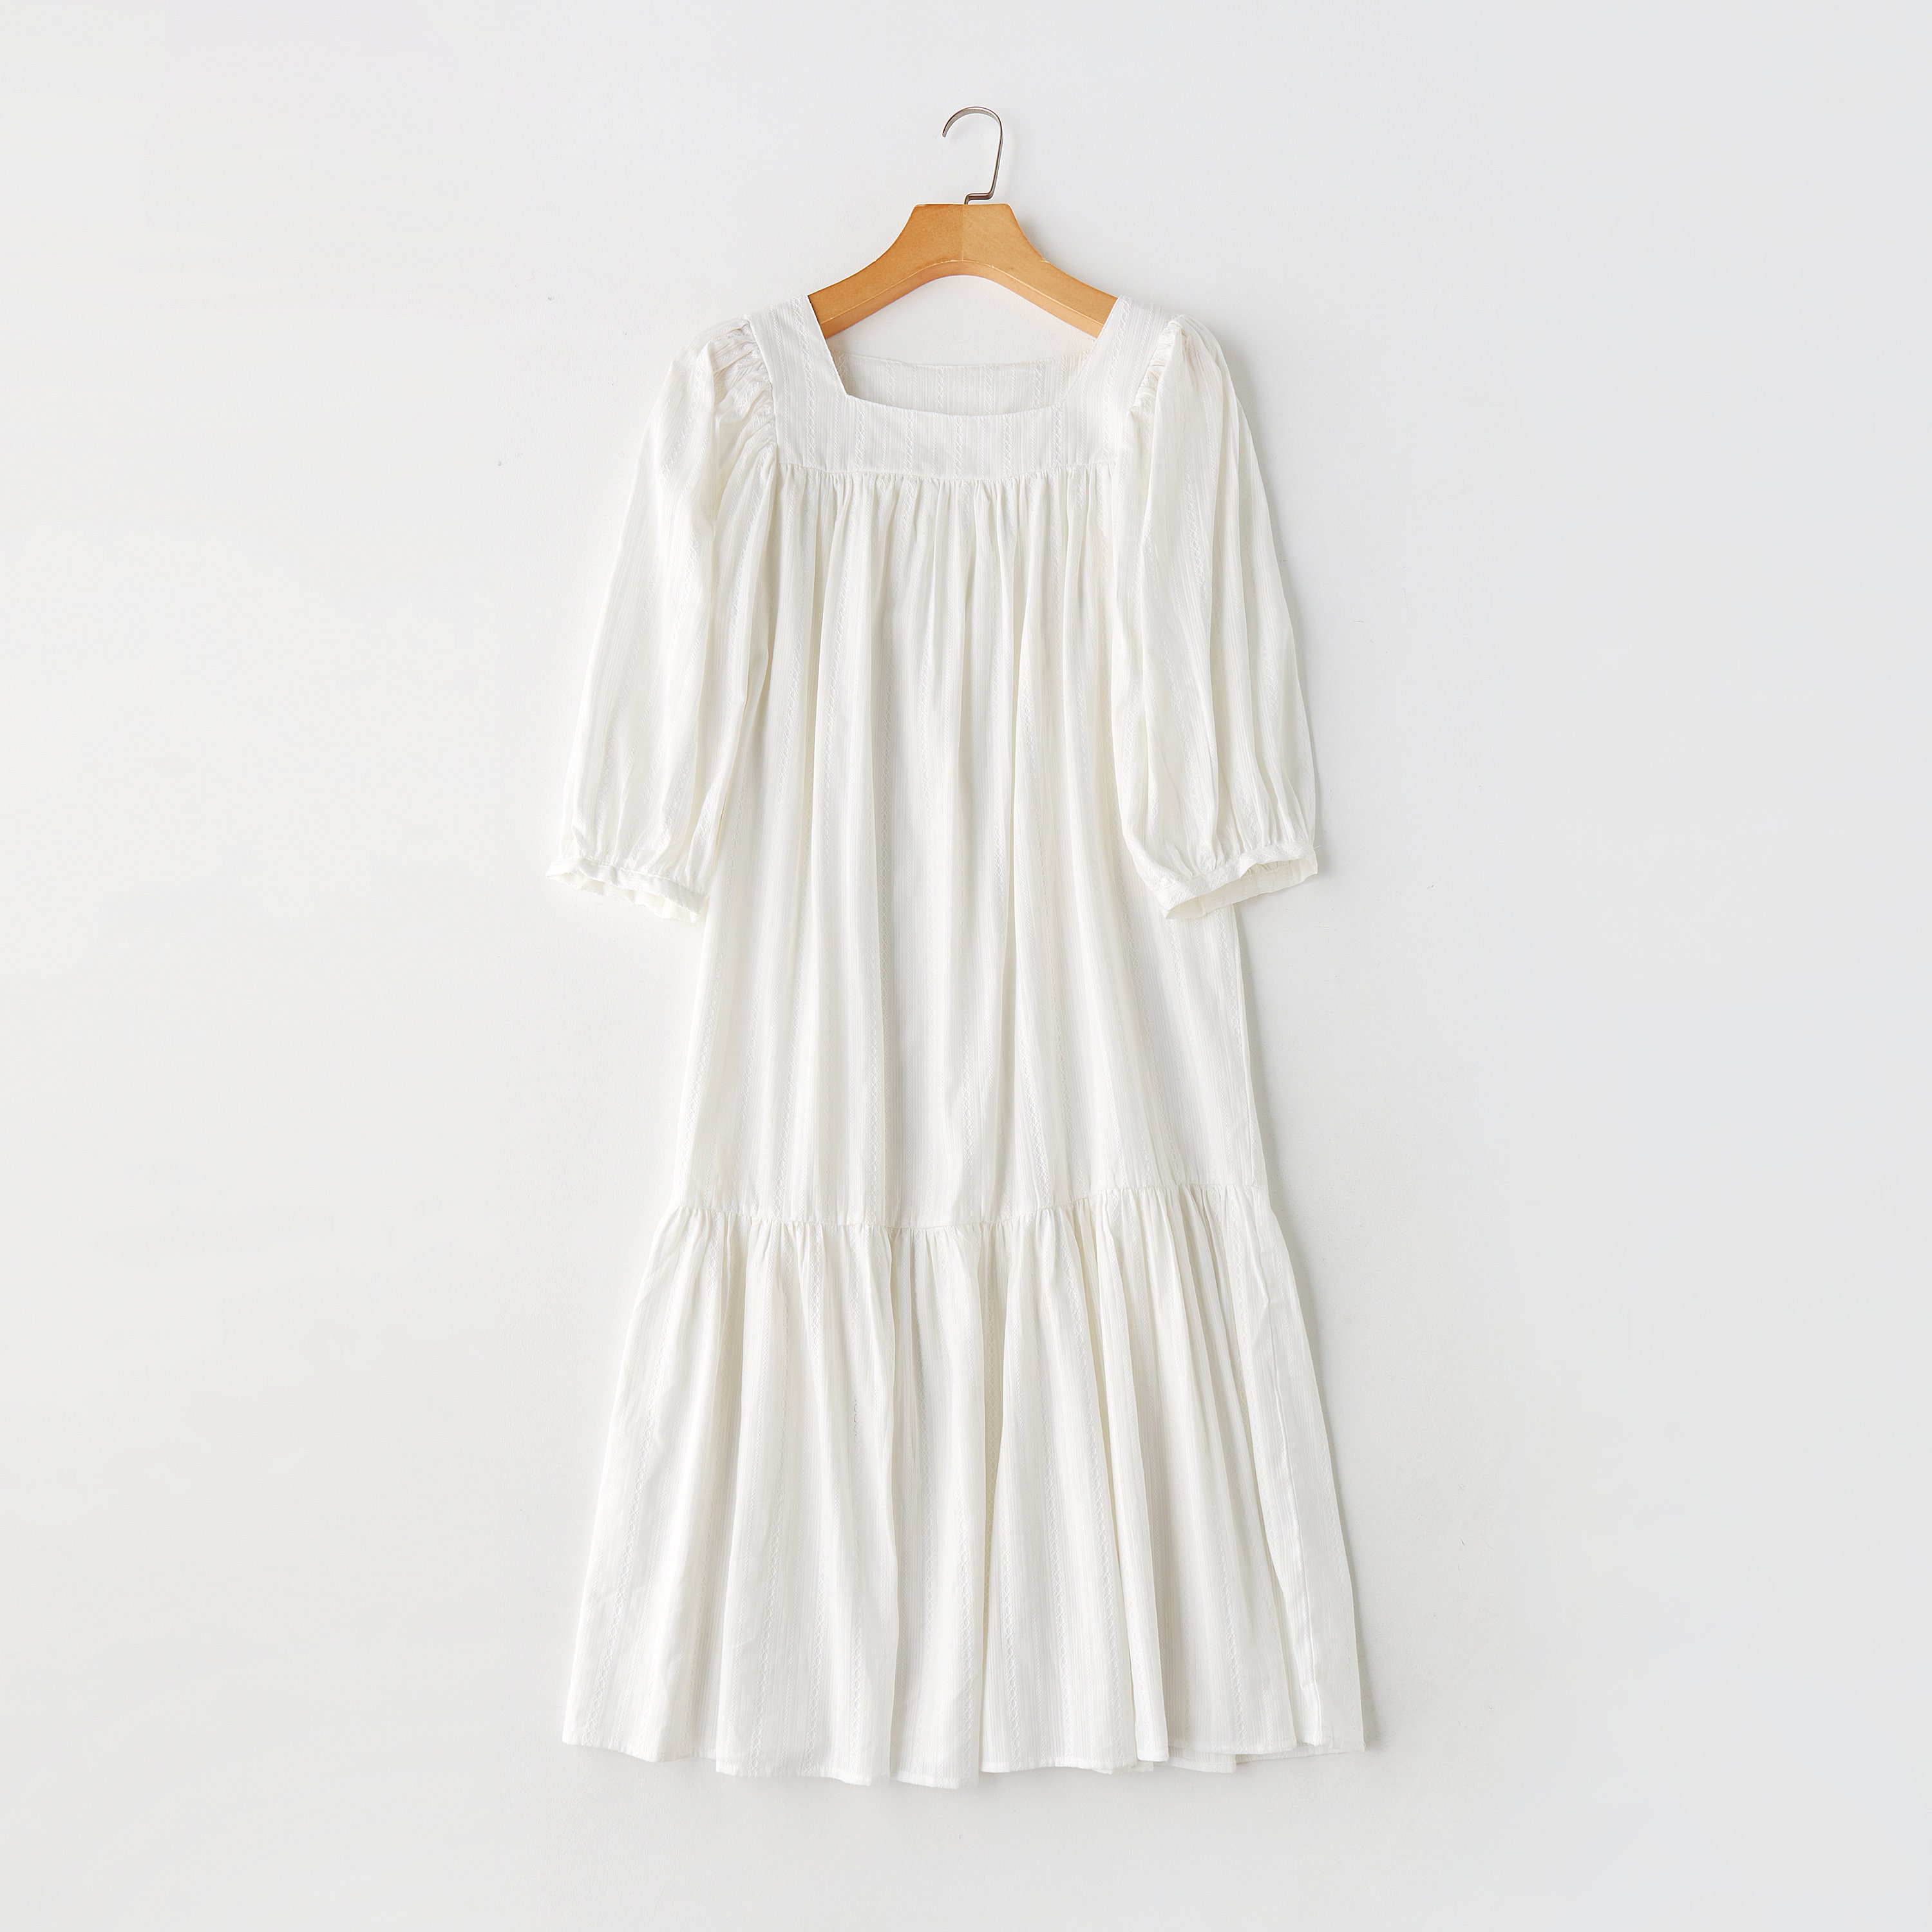 White Summer Dress Cotton Nightgown Vintage Dress Summer | Etsy